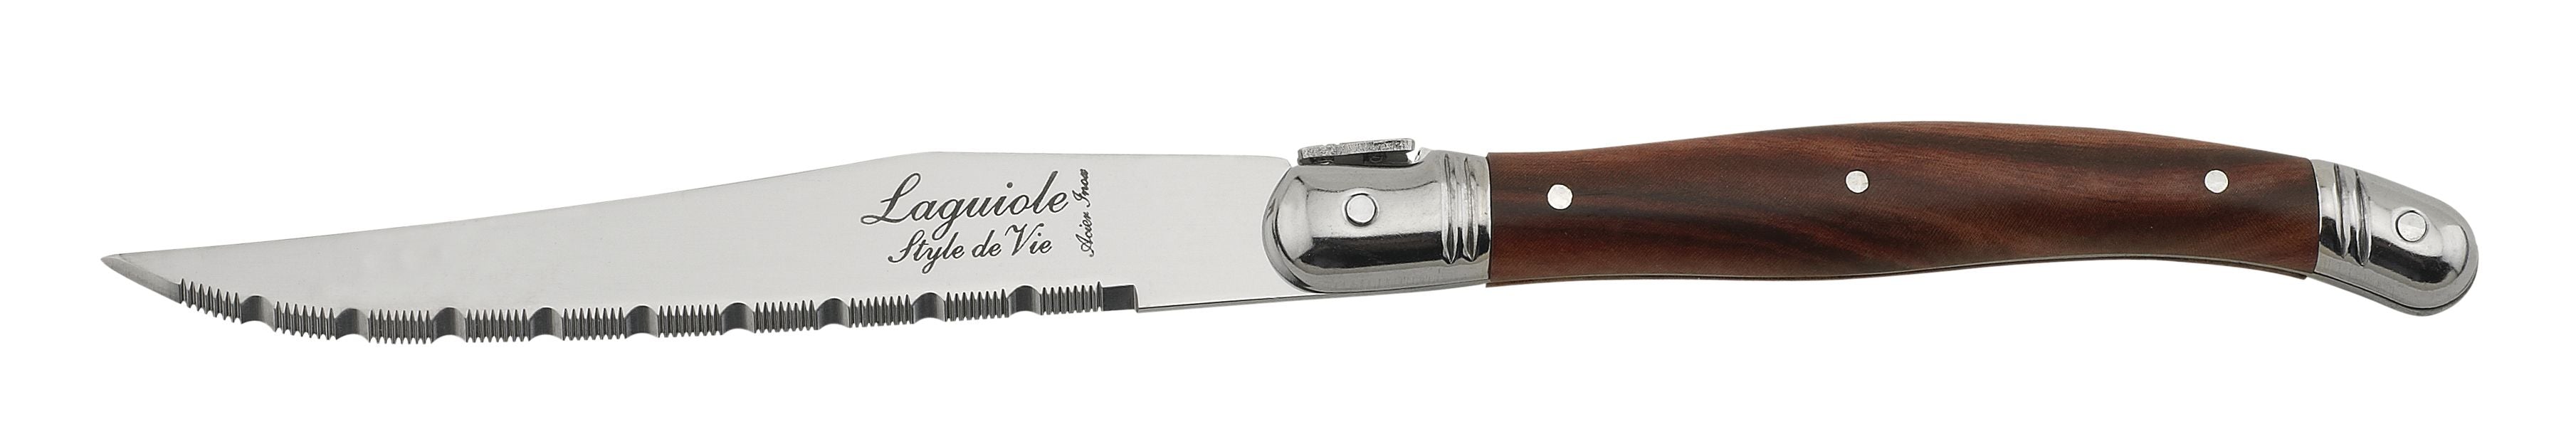 Style de Vie authentique laguiole premium line biff knivar 6 stycken set, mörk trä